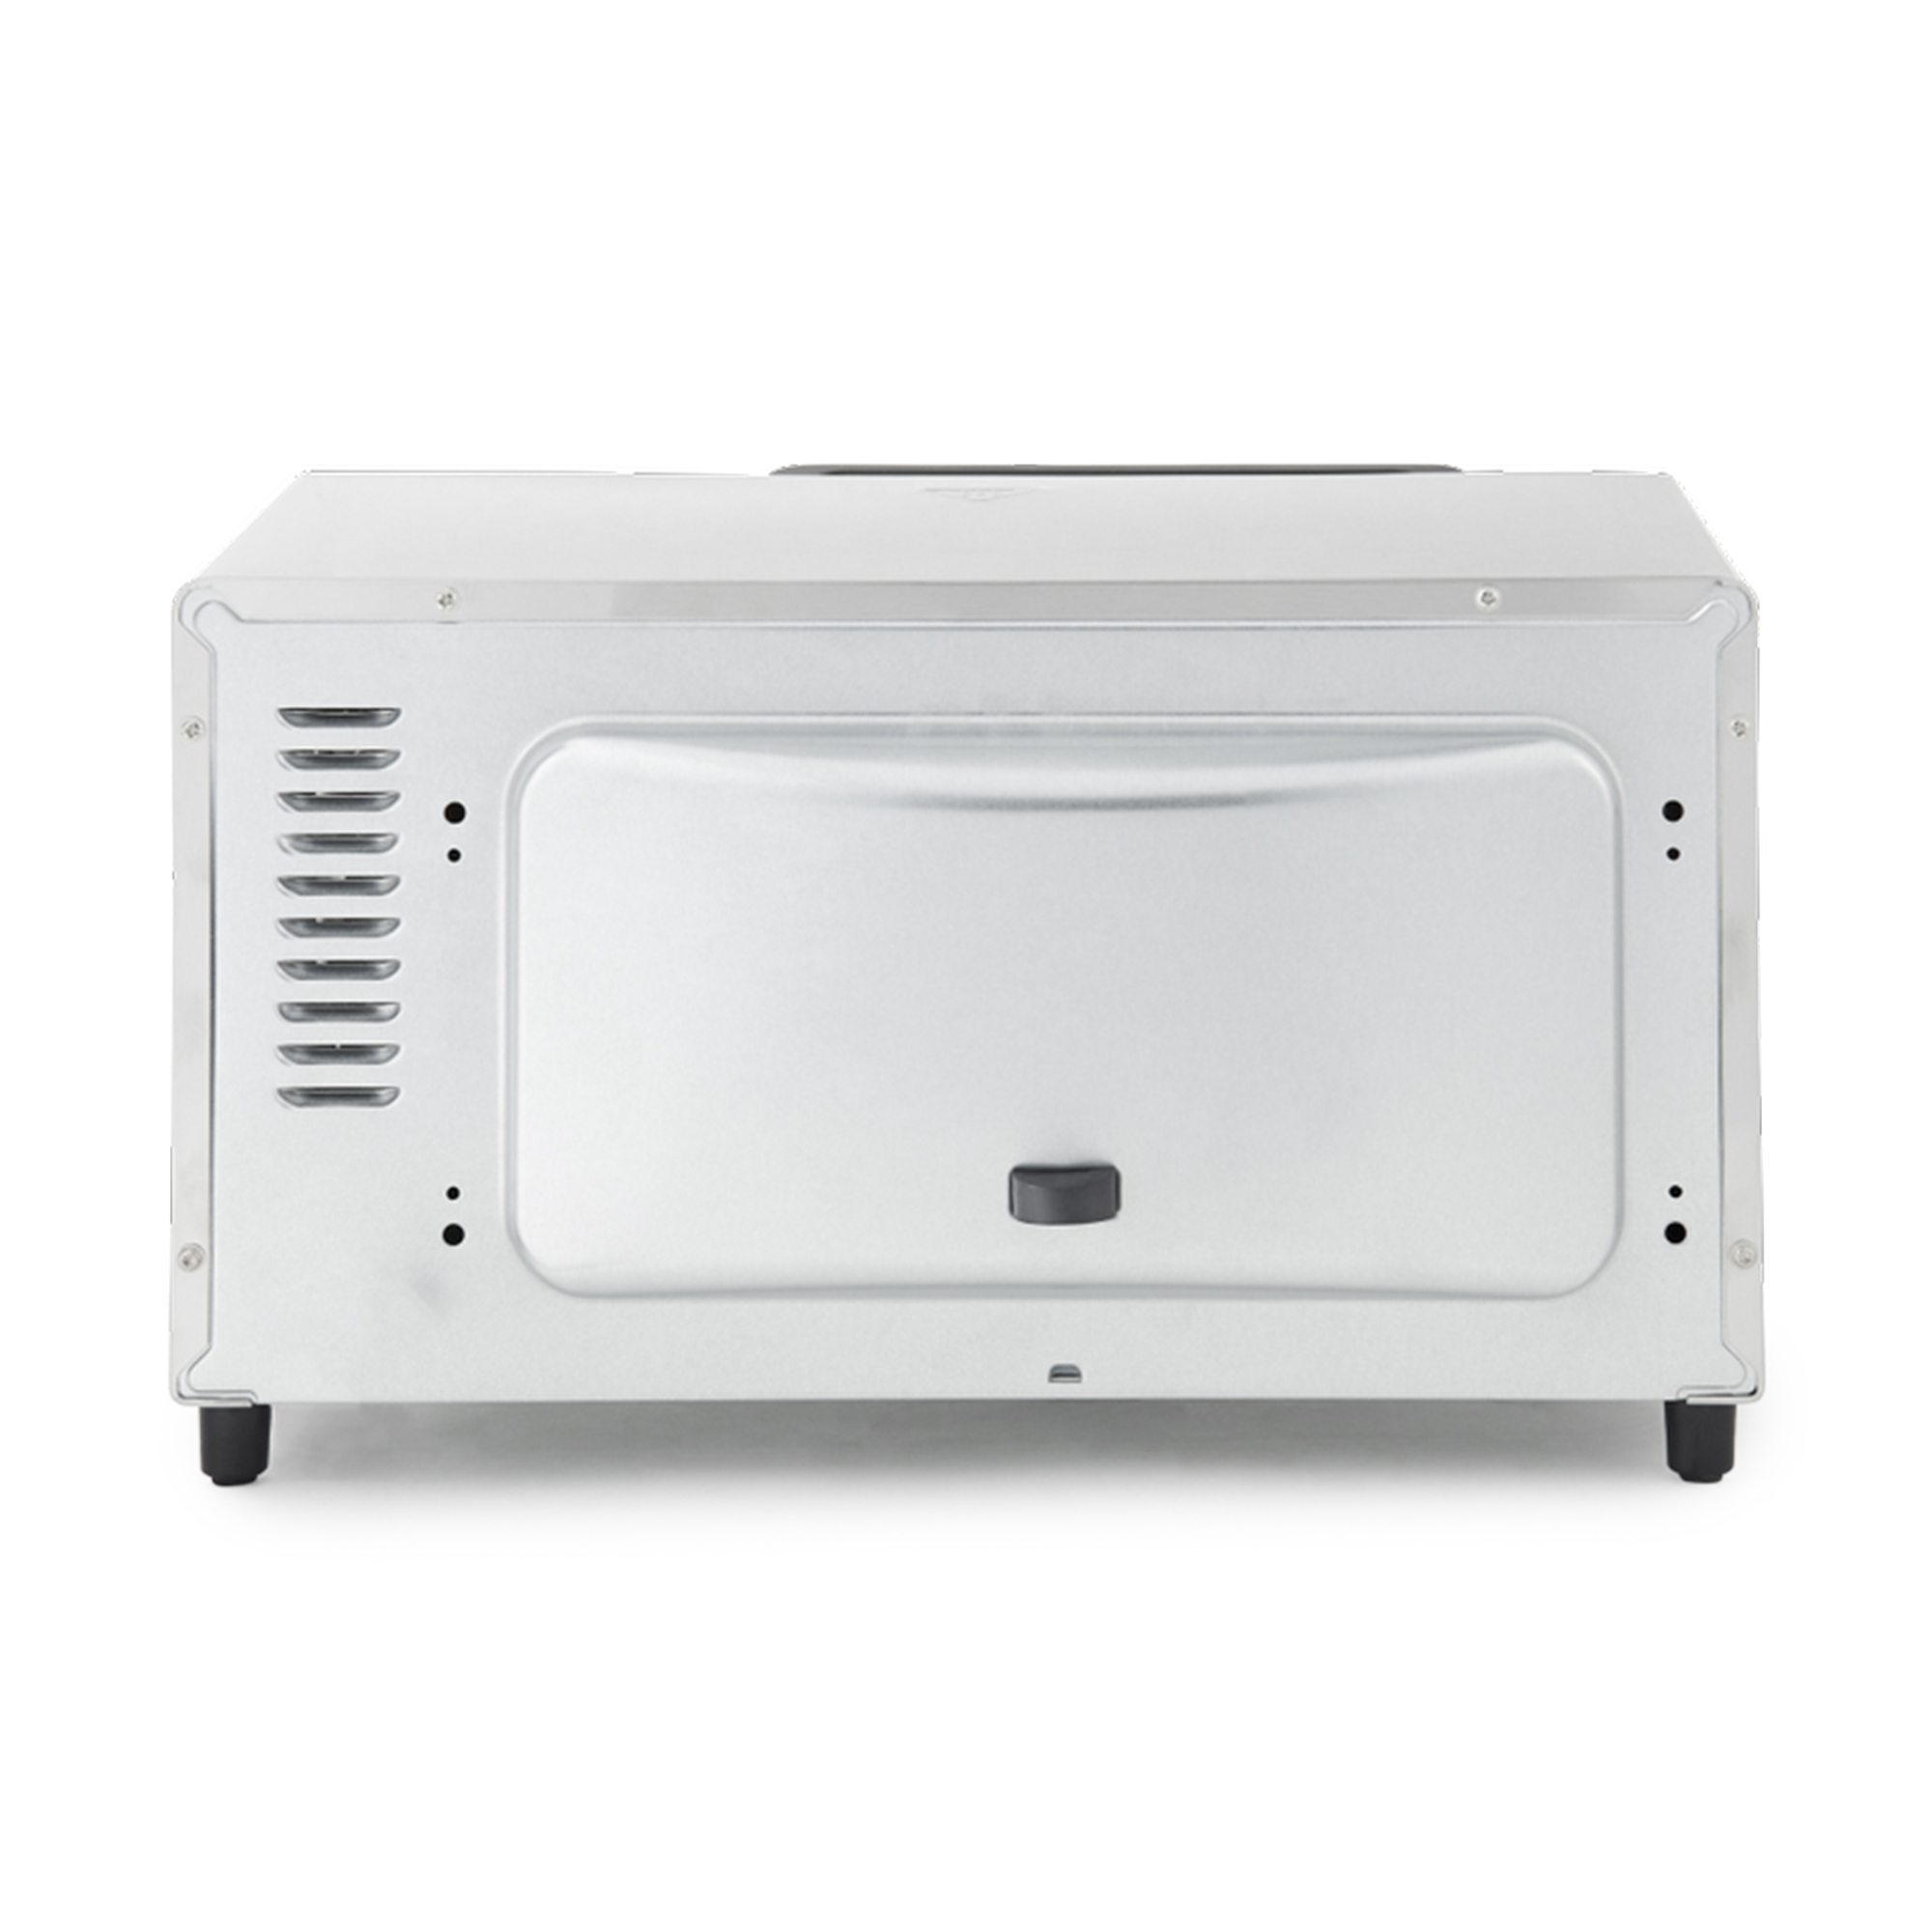 Hamilton Beach Countertop Toaster Oven | Model# 31401 - image 4 of 6